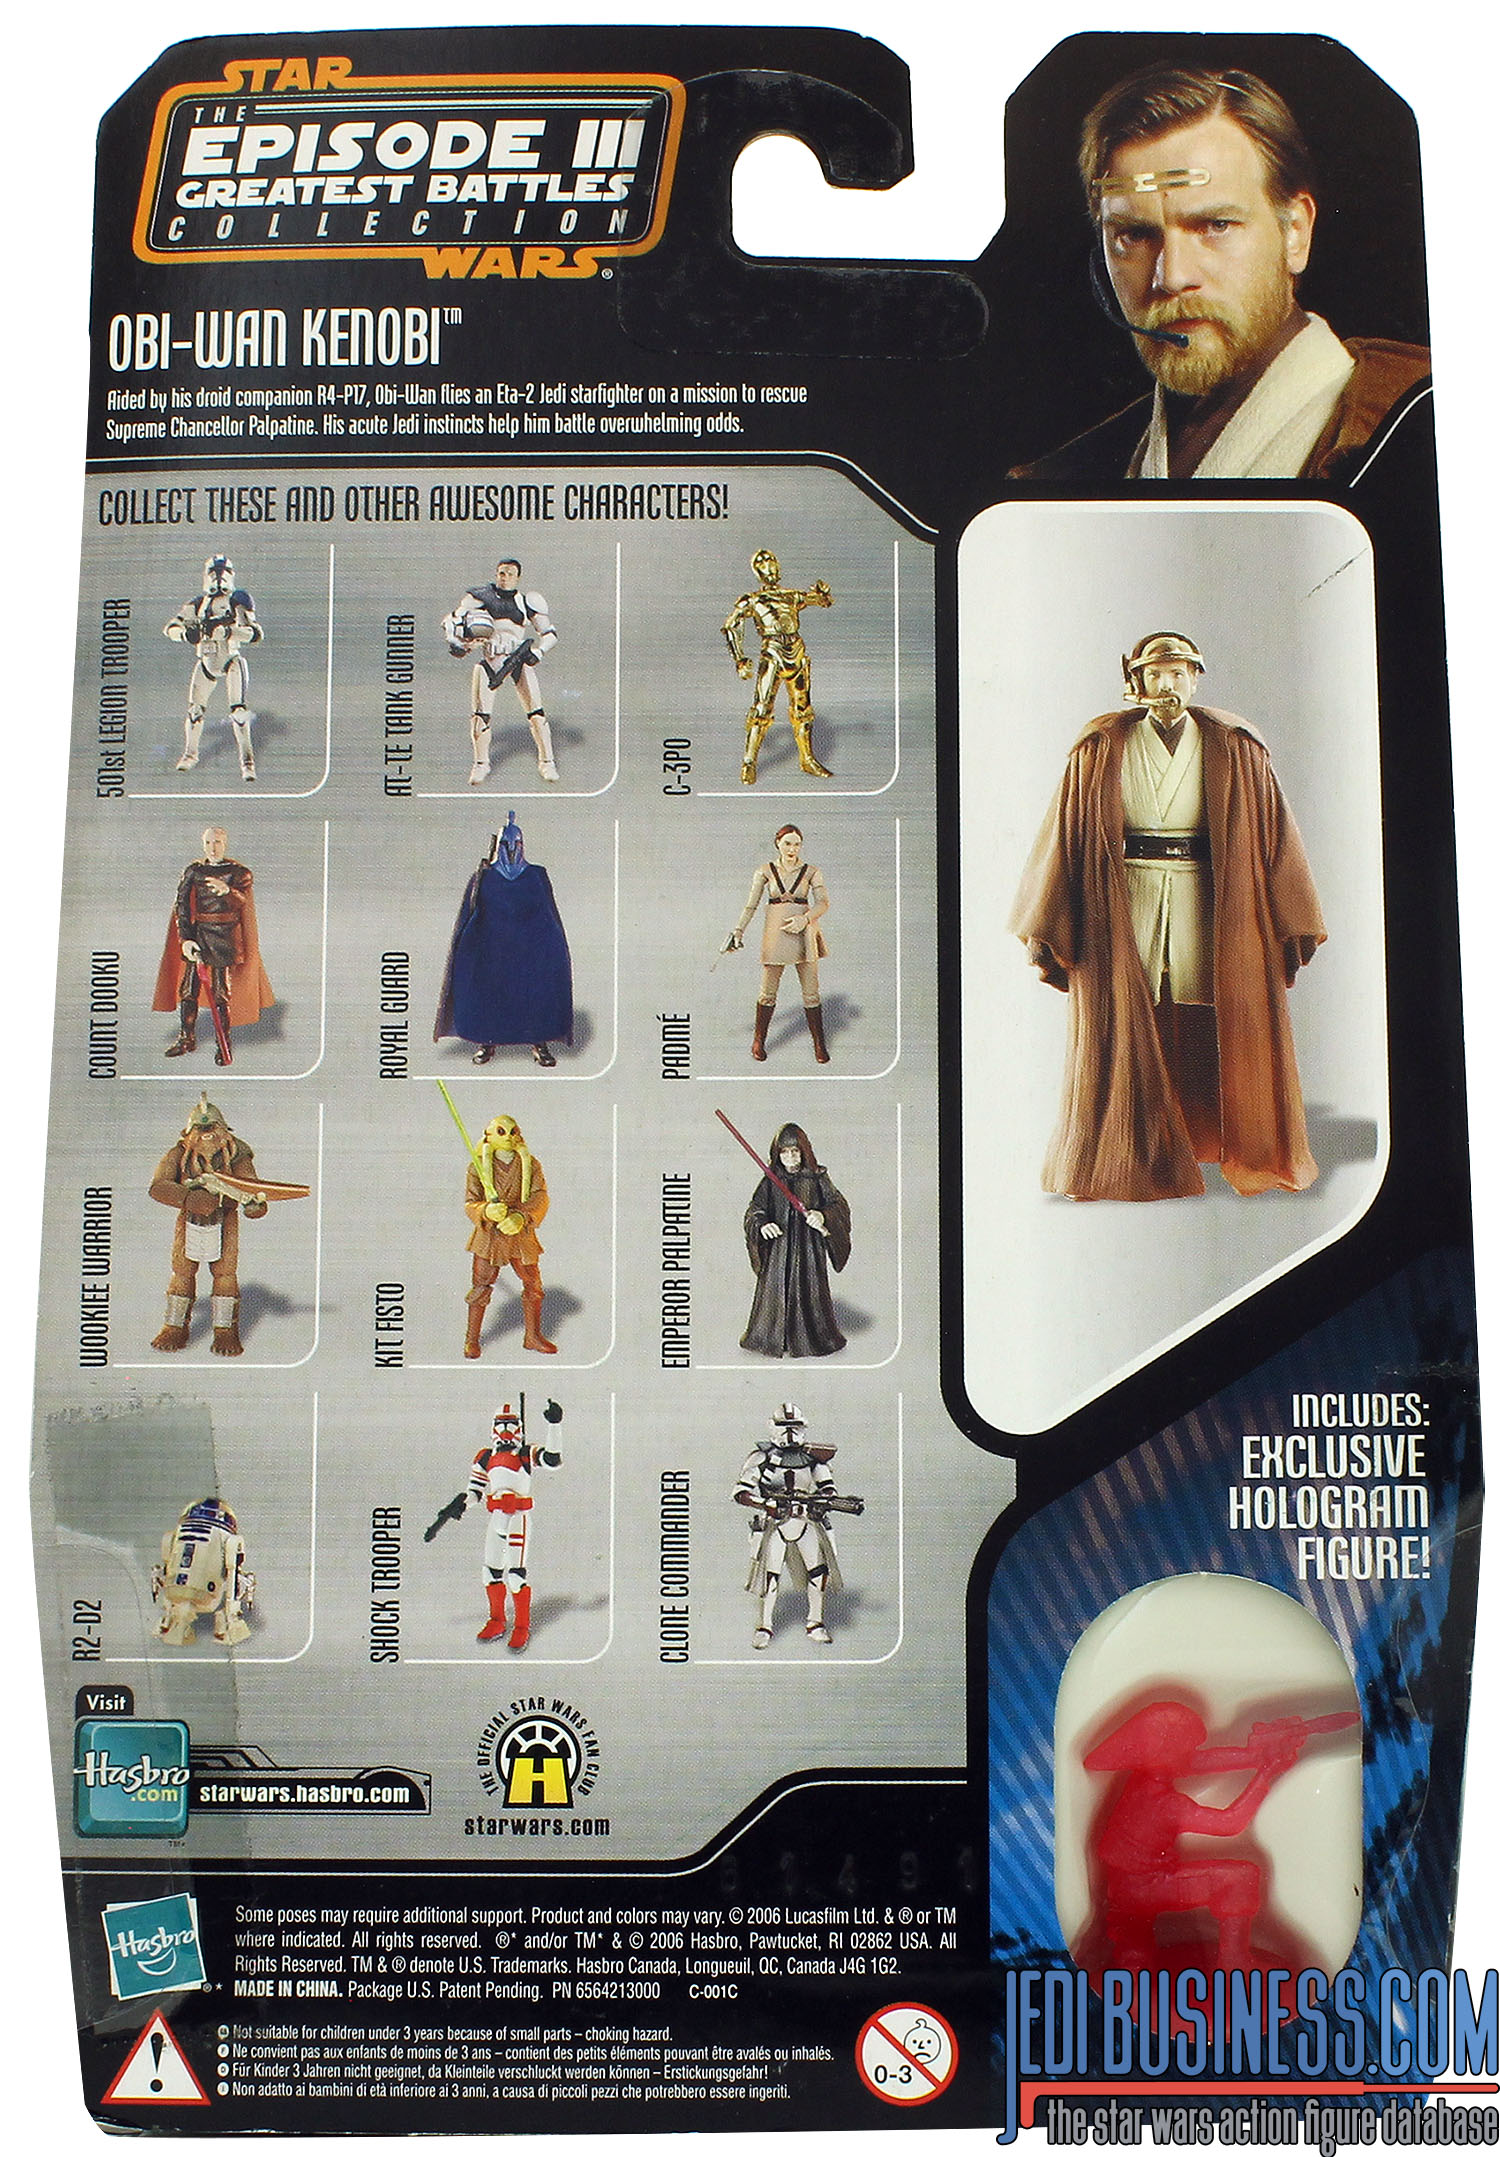 Obi-Wan Kenobi Greatest Battles